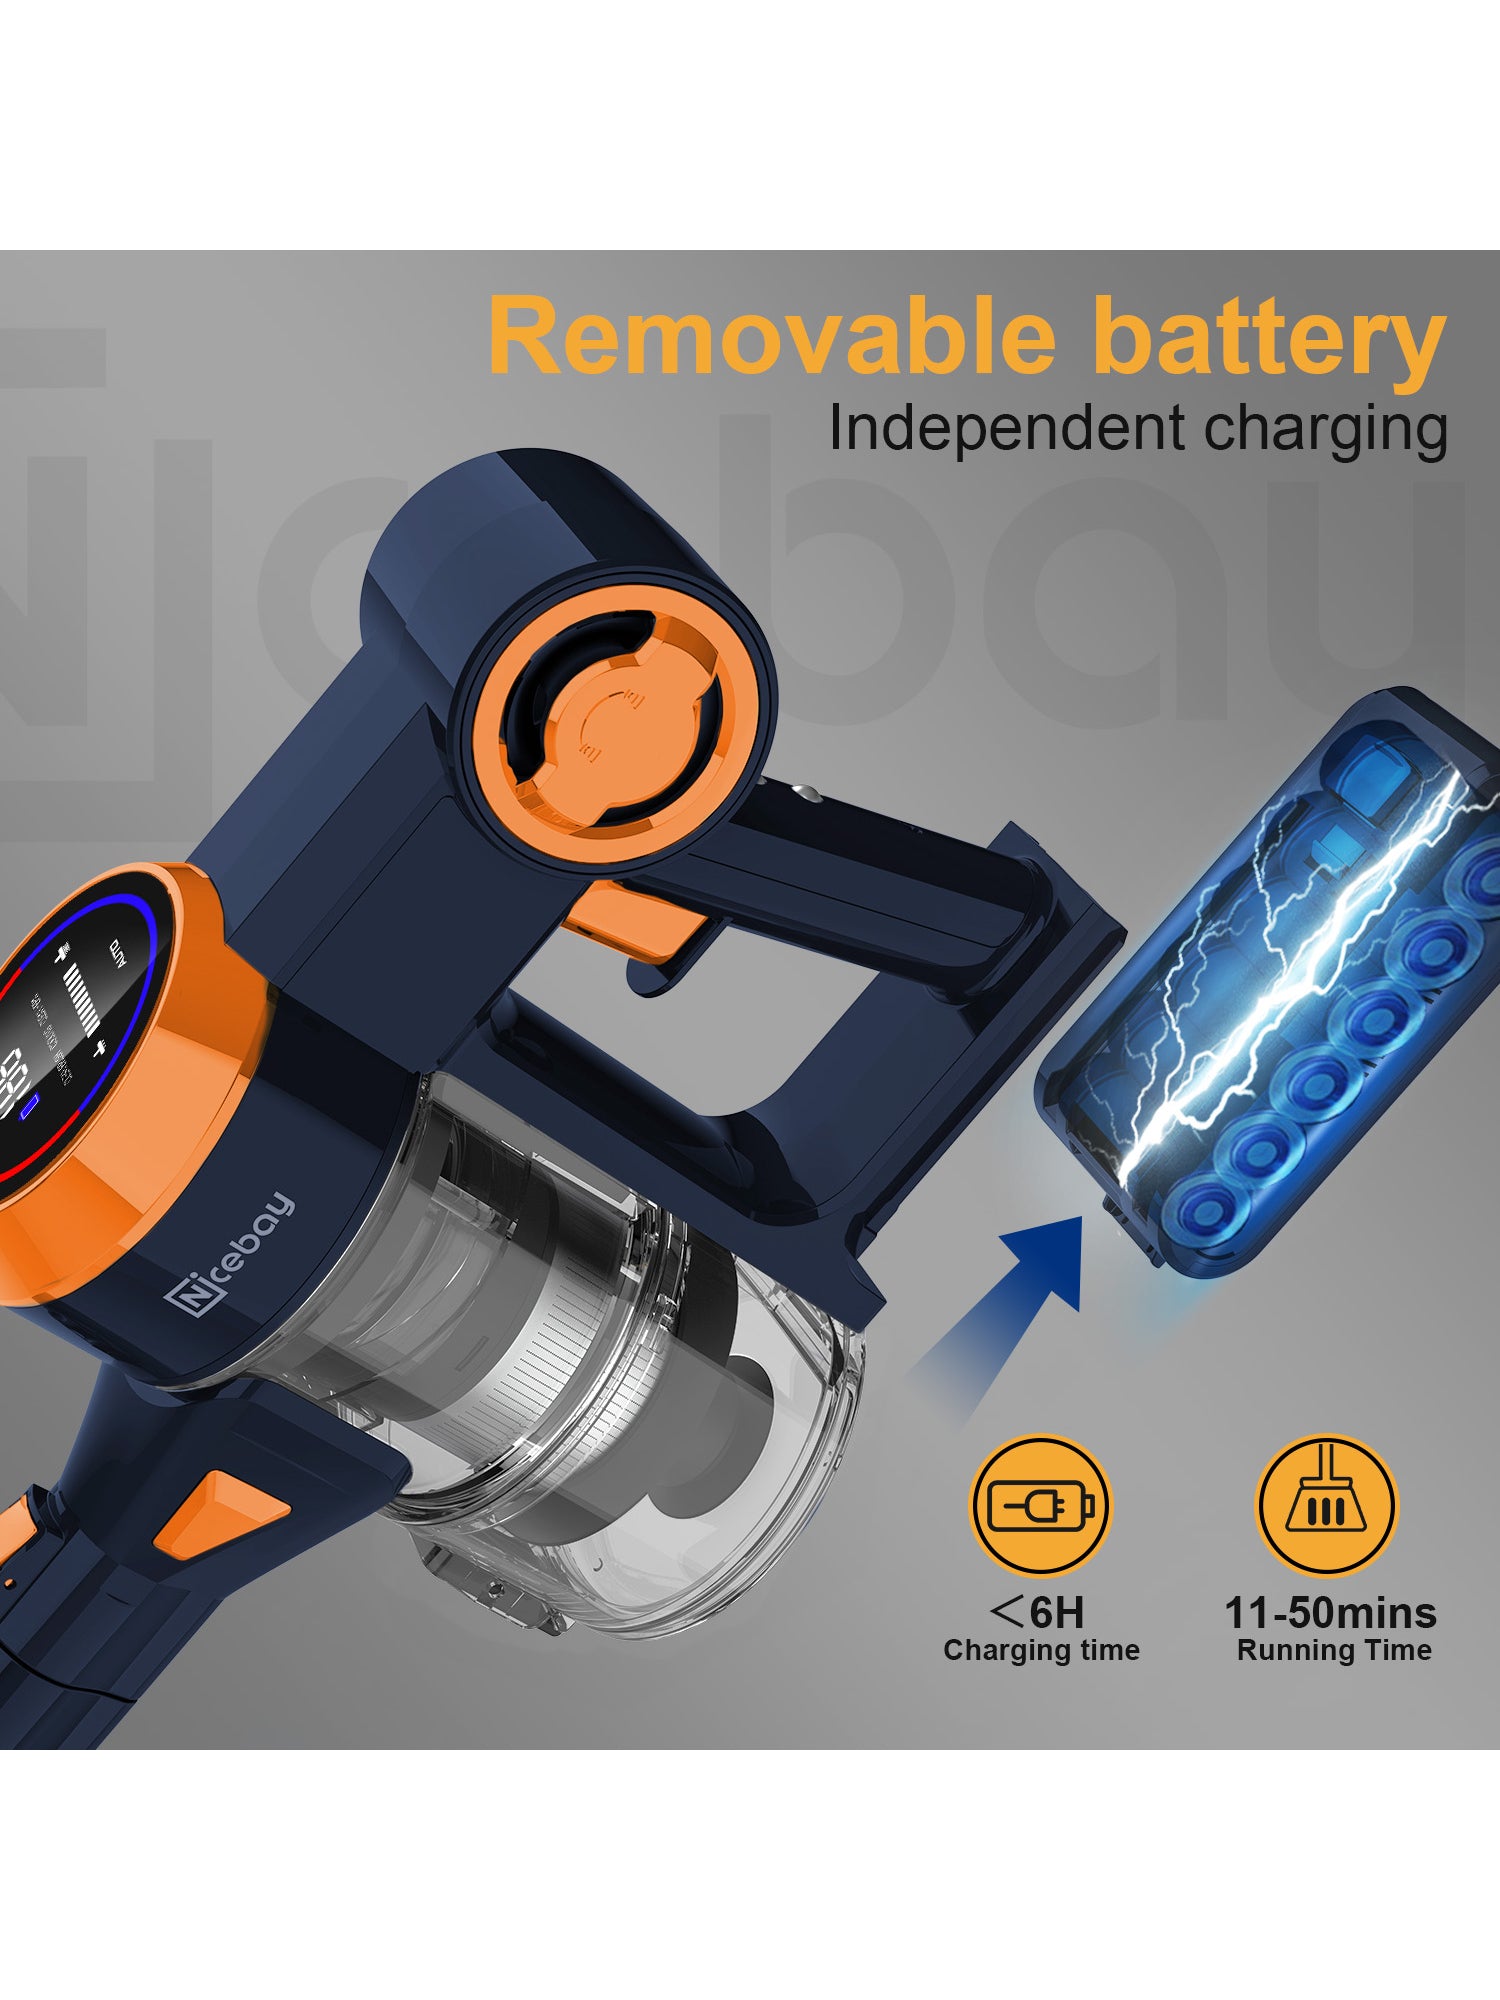 NICEBAY® EV-6803 25Kpa Brushless Motor Stick Cordless Vacuum Cleaner with LED Smart Induction auto-adjustment  Blue and Orange Color